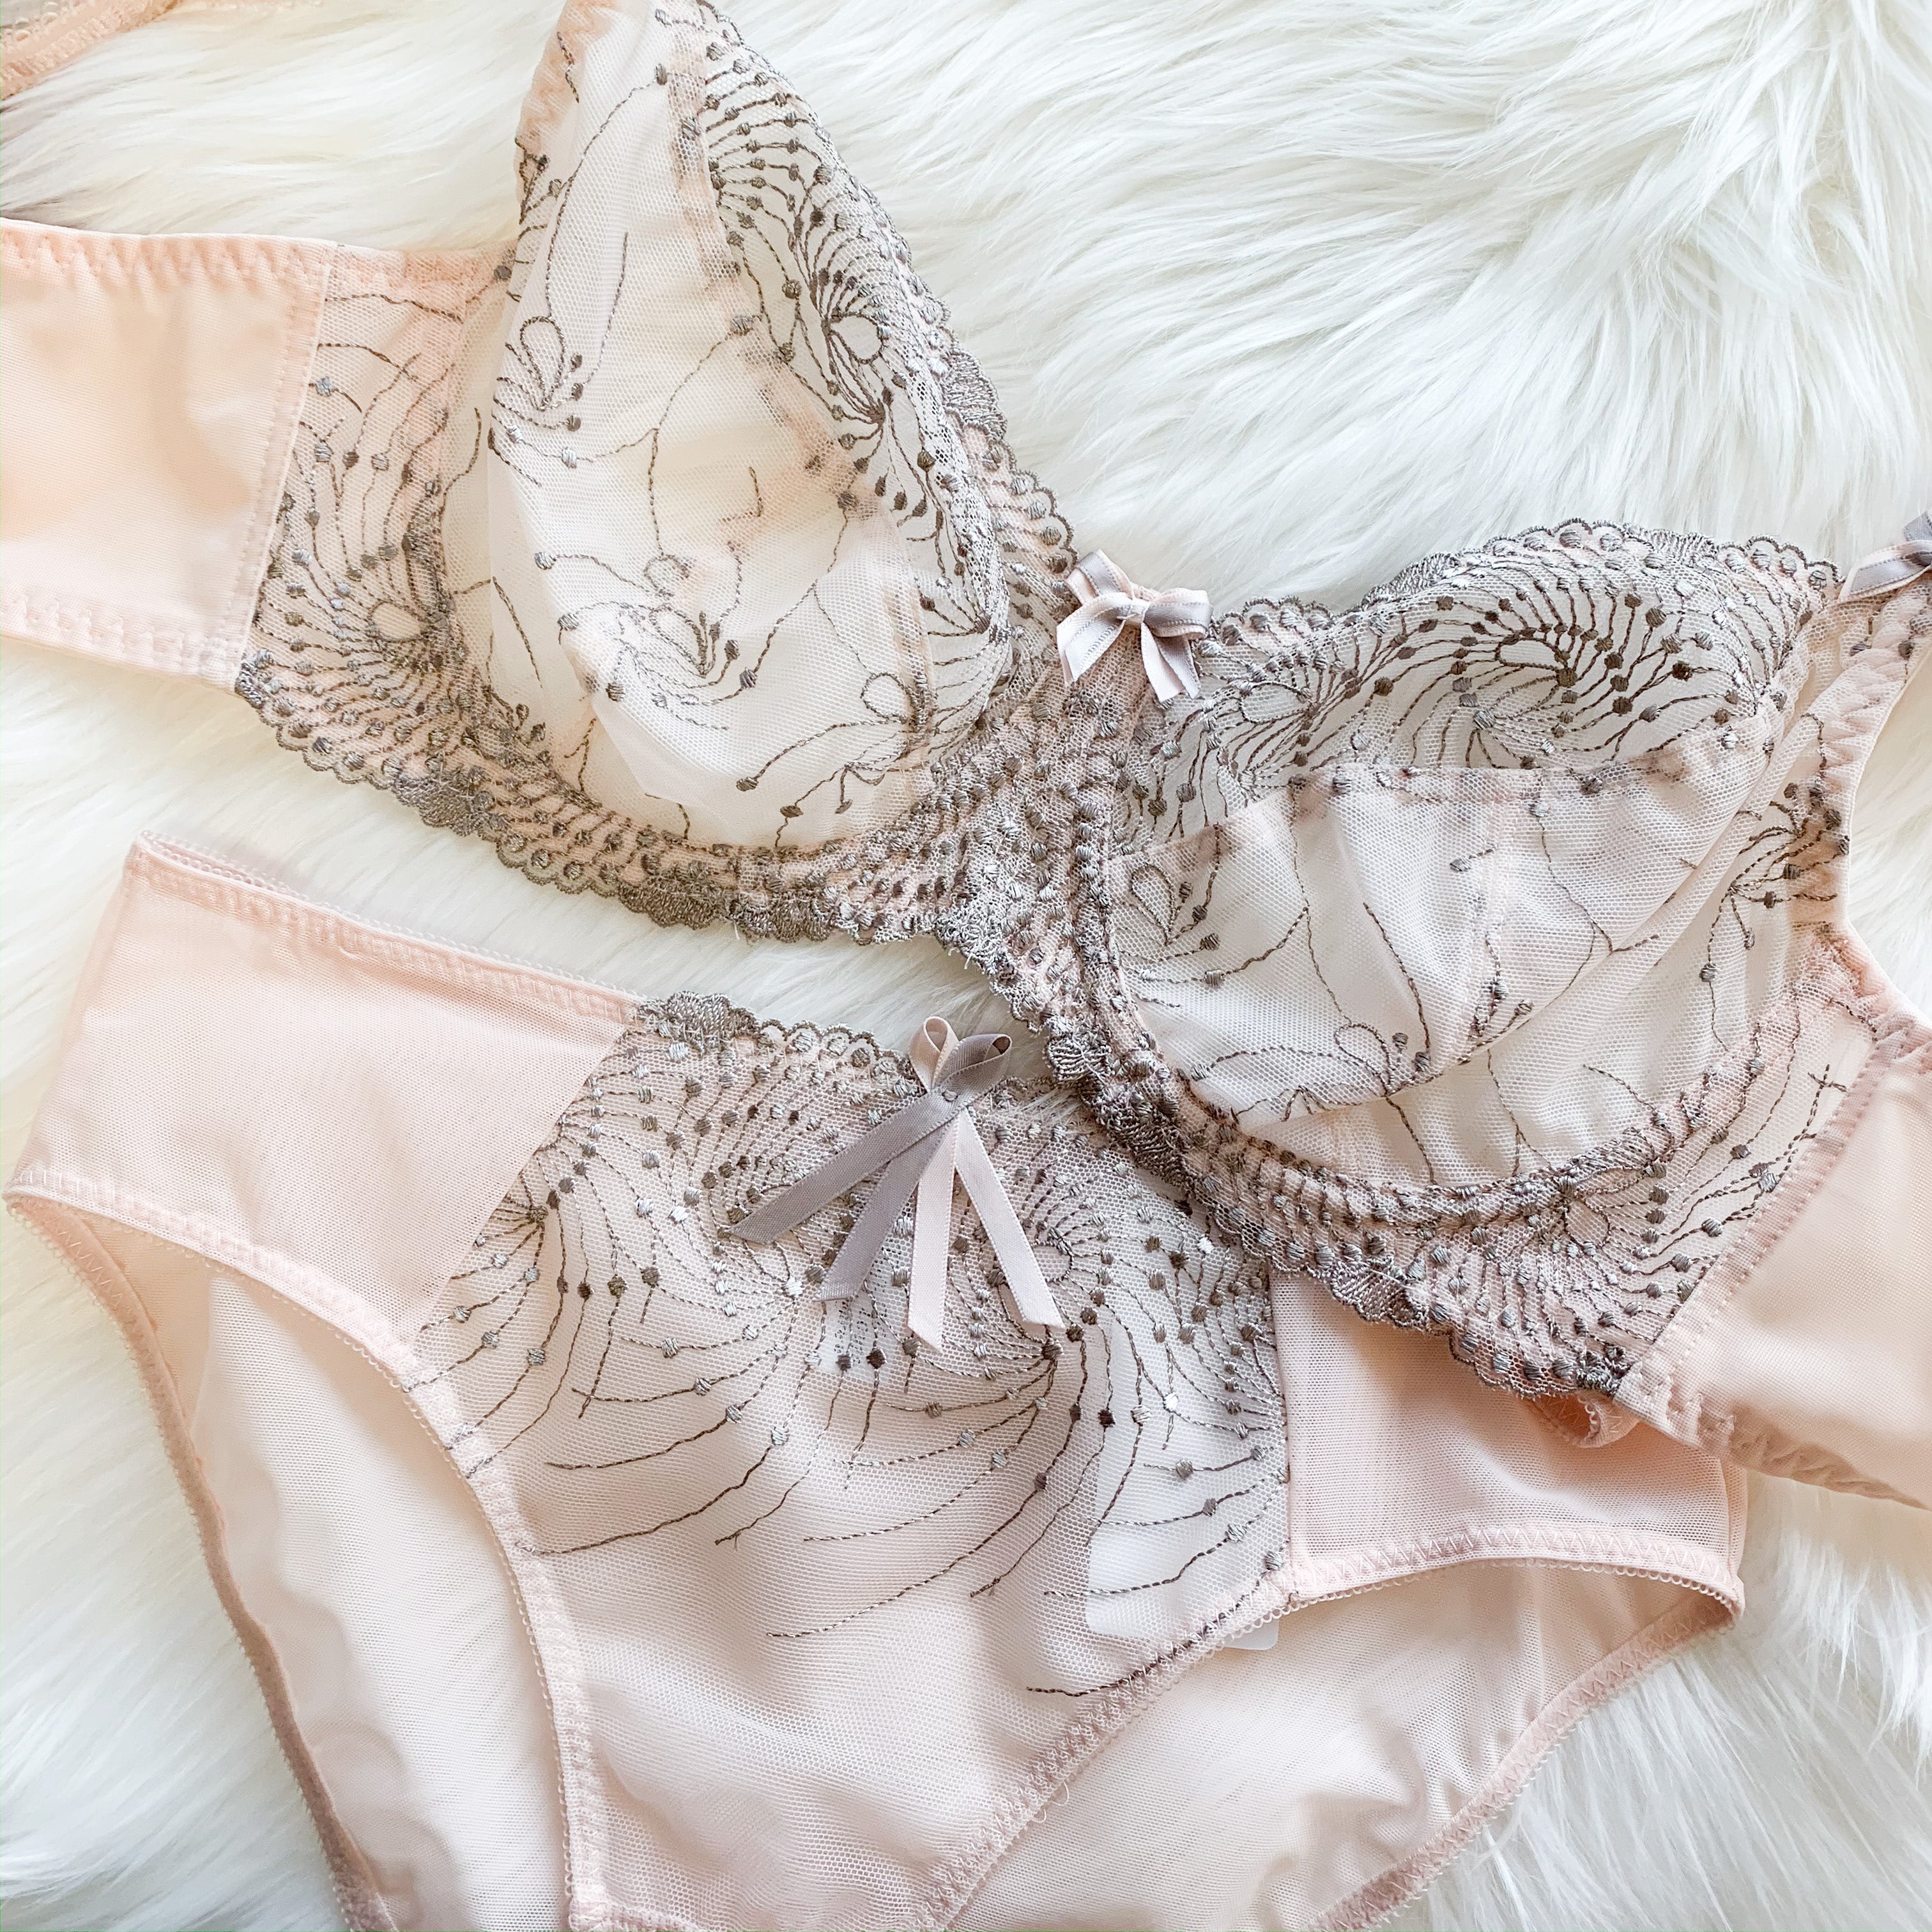 PrimaDonna 2 pieces lingerie set Montara Crystal Pink